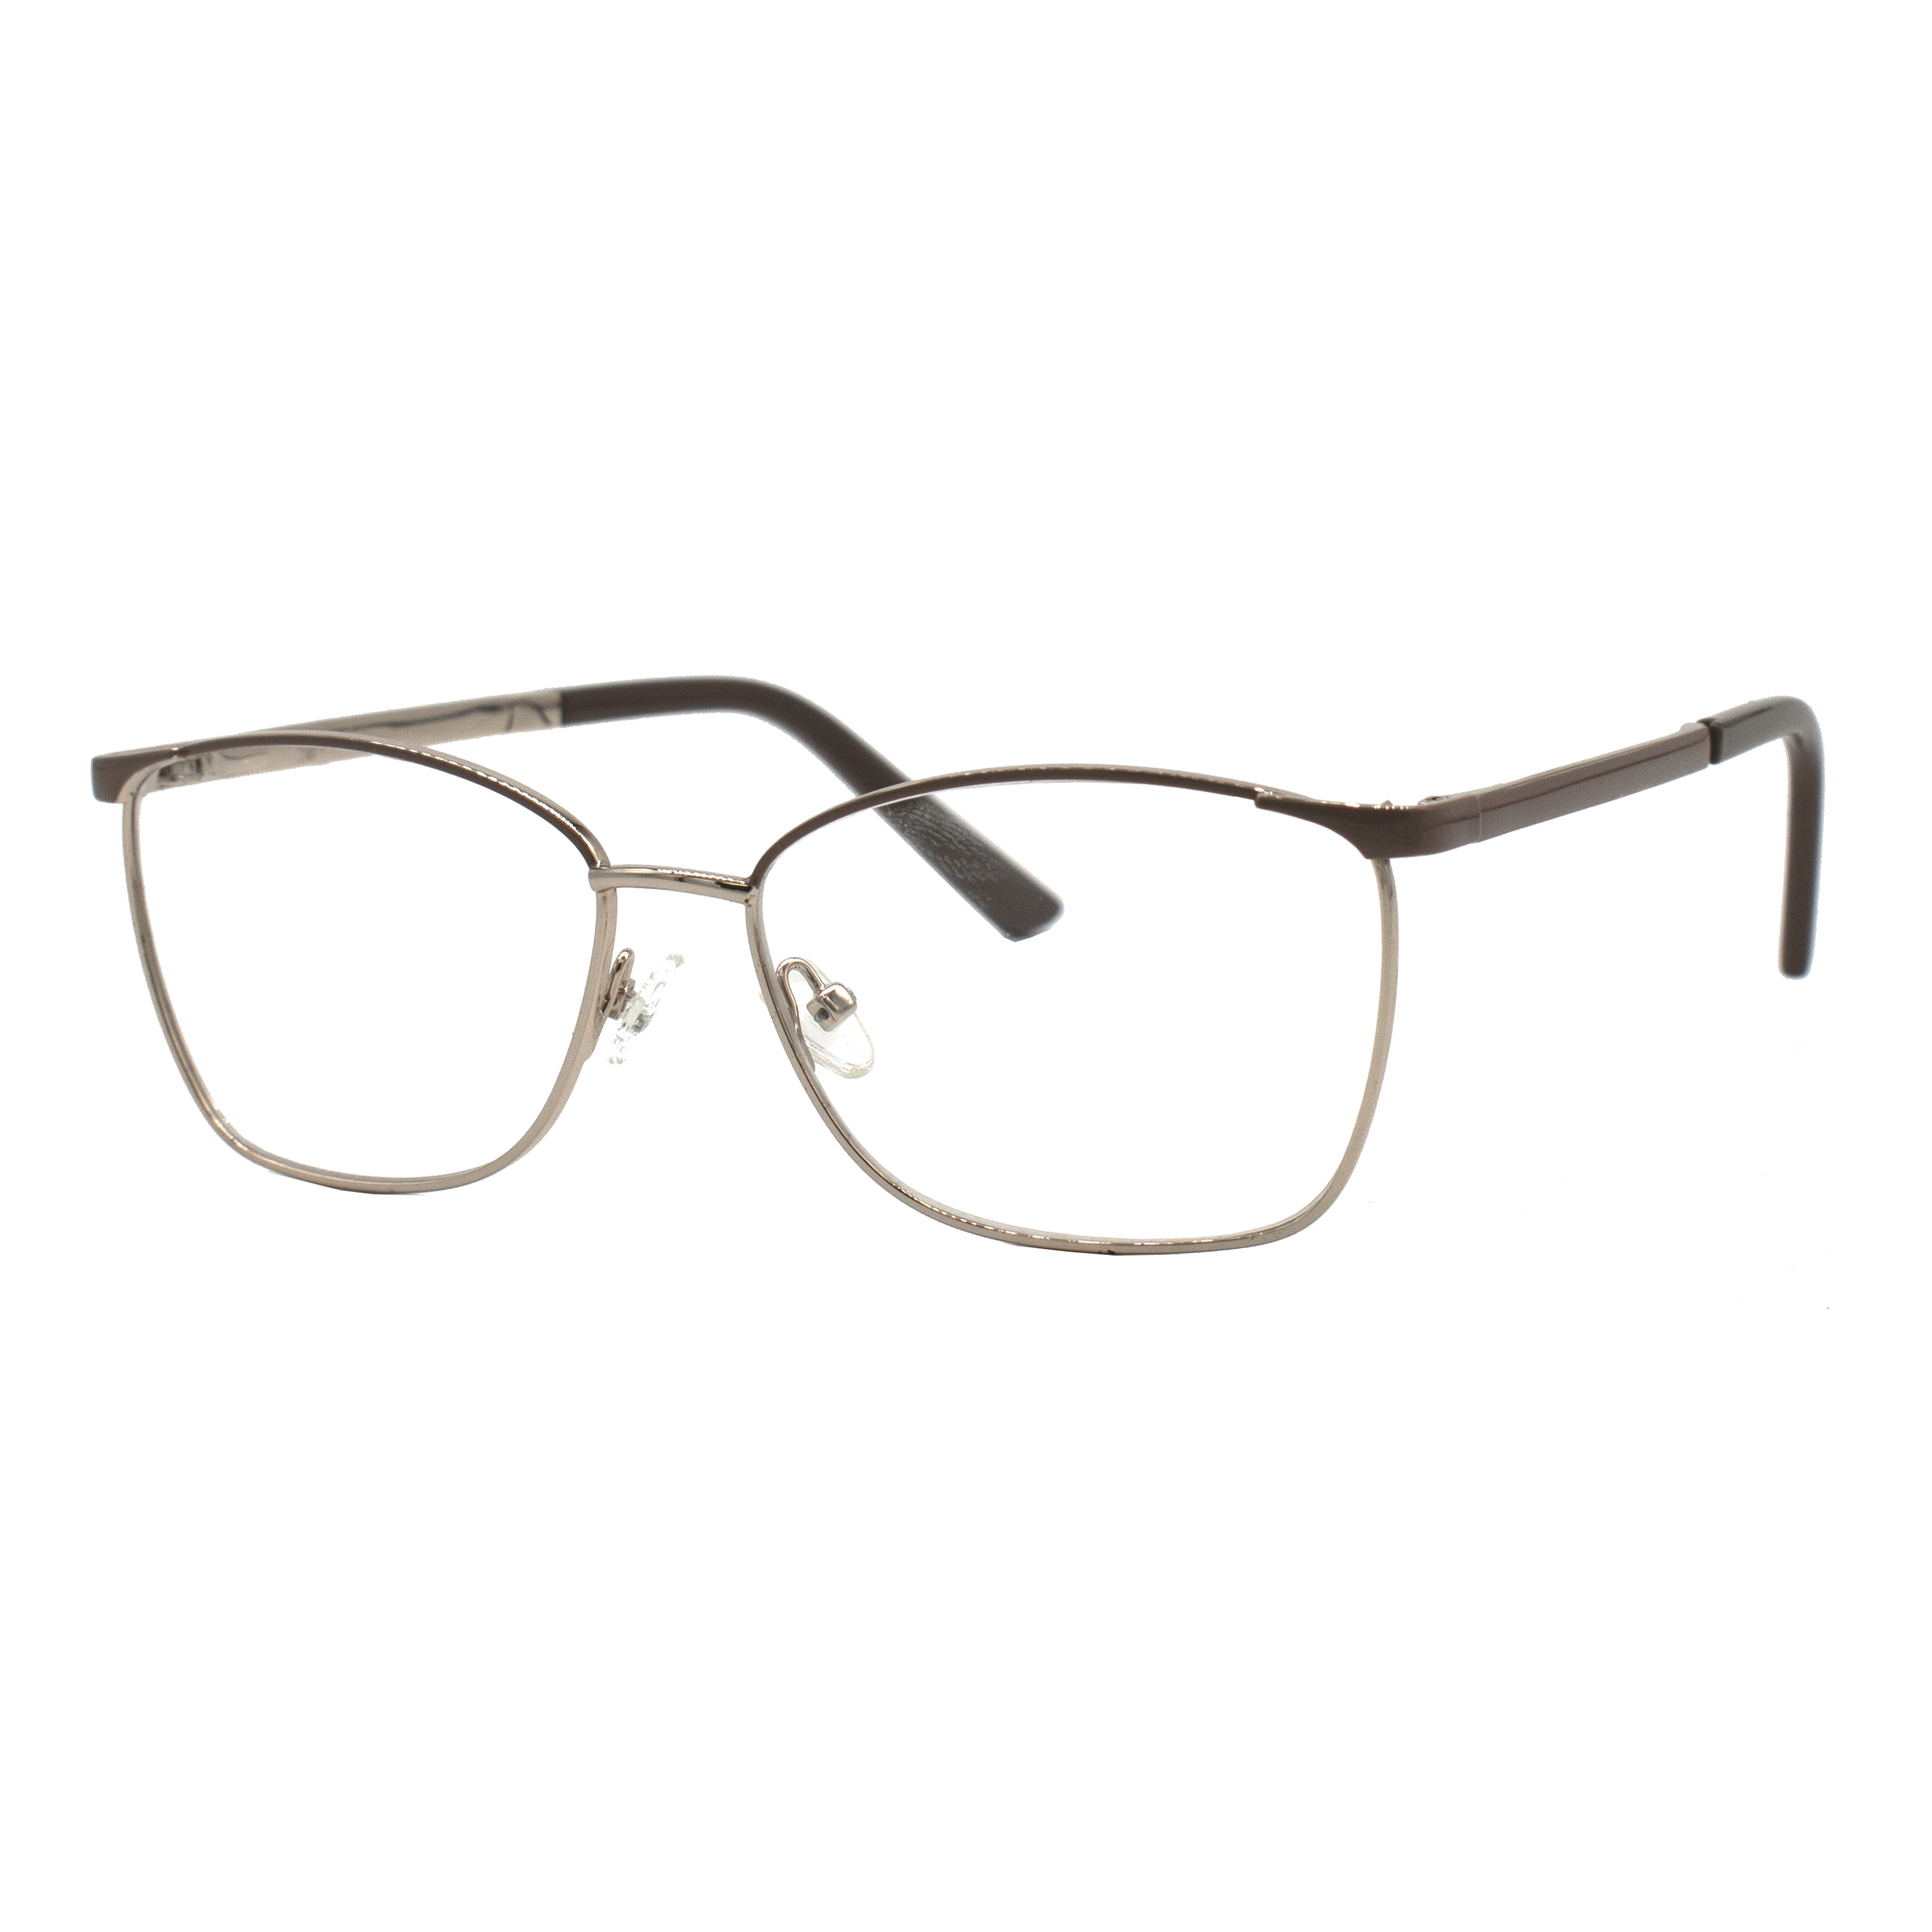 Walmart Women's Rx'able Eyeglasses, WM402155-1, Gold, 55-15-140 - image 2 of 5